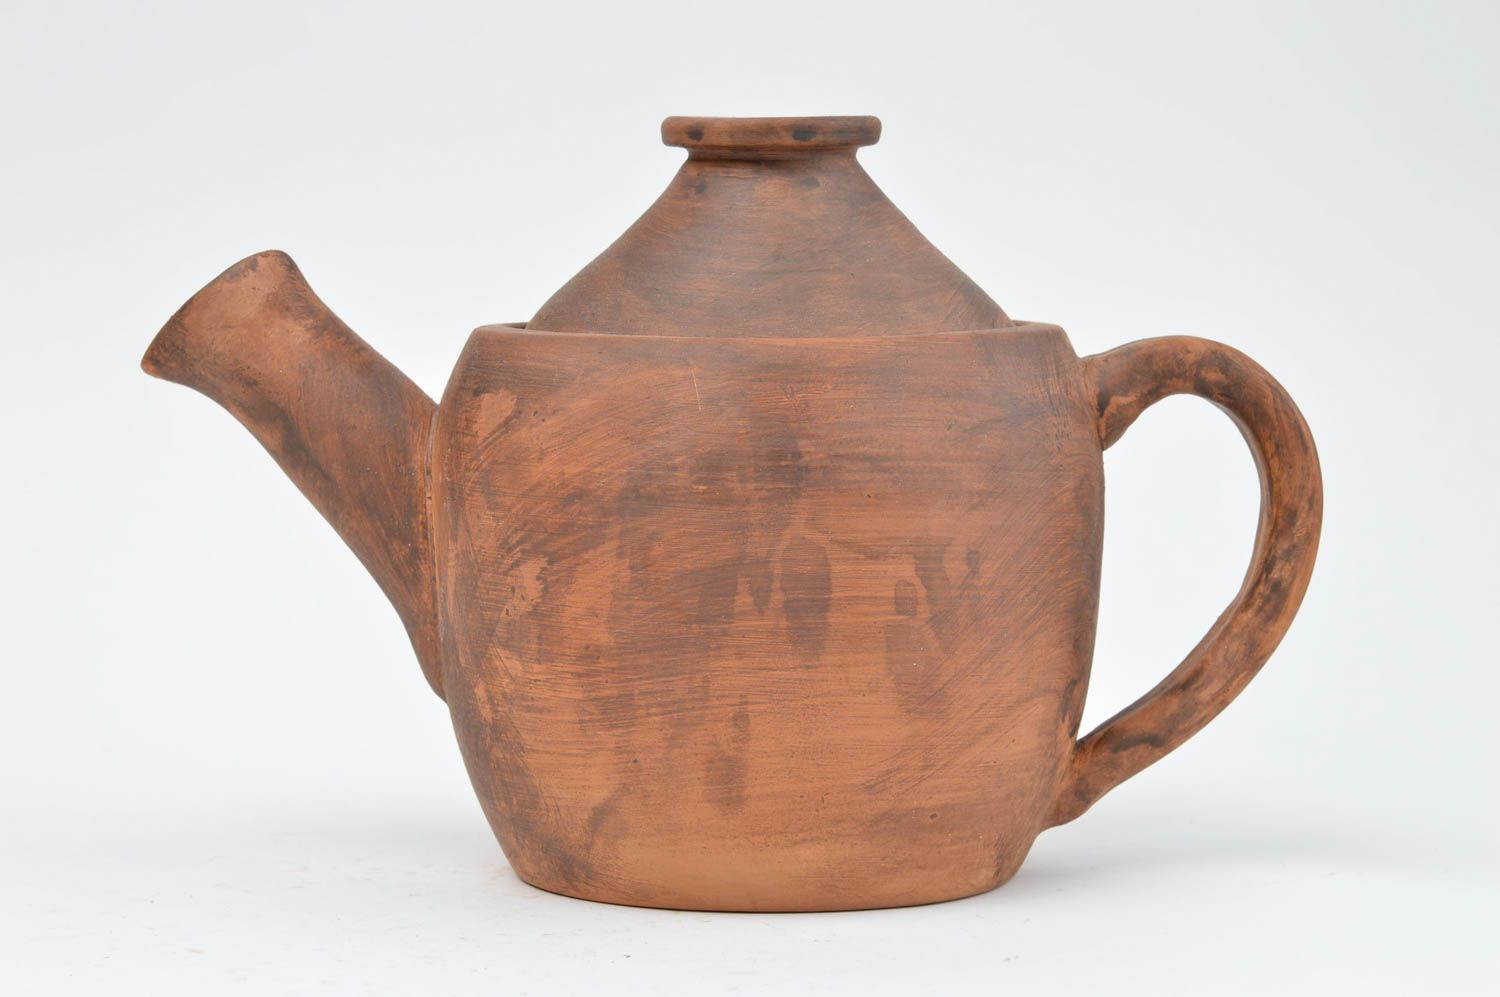 Beautiful handmade ceramic teapot clay teapot designs table setting ideas photo 2